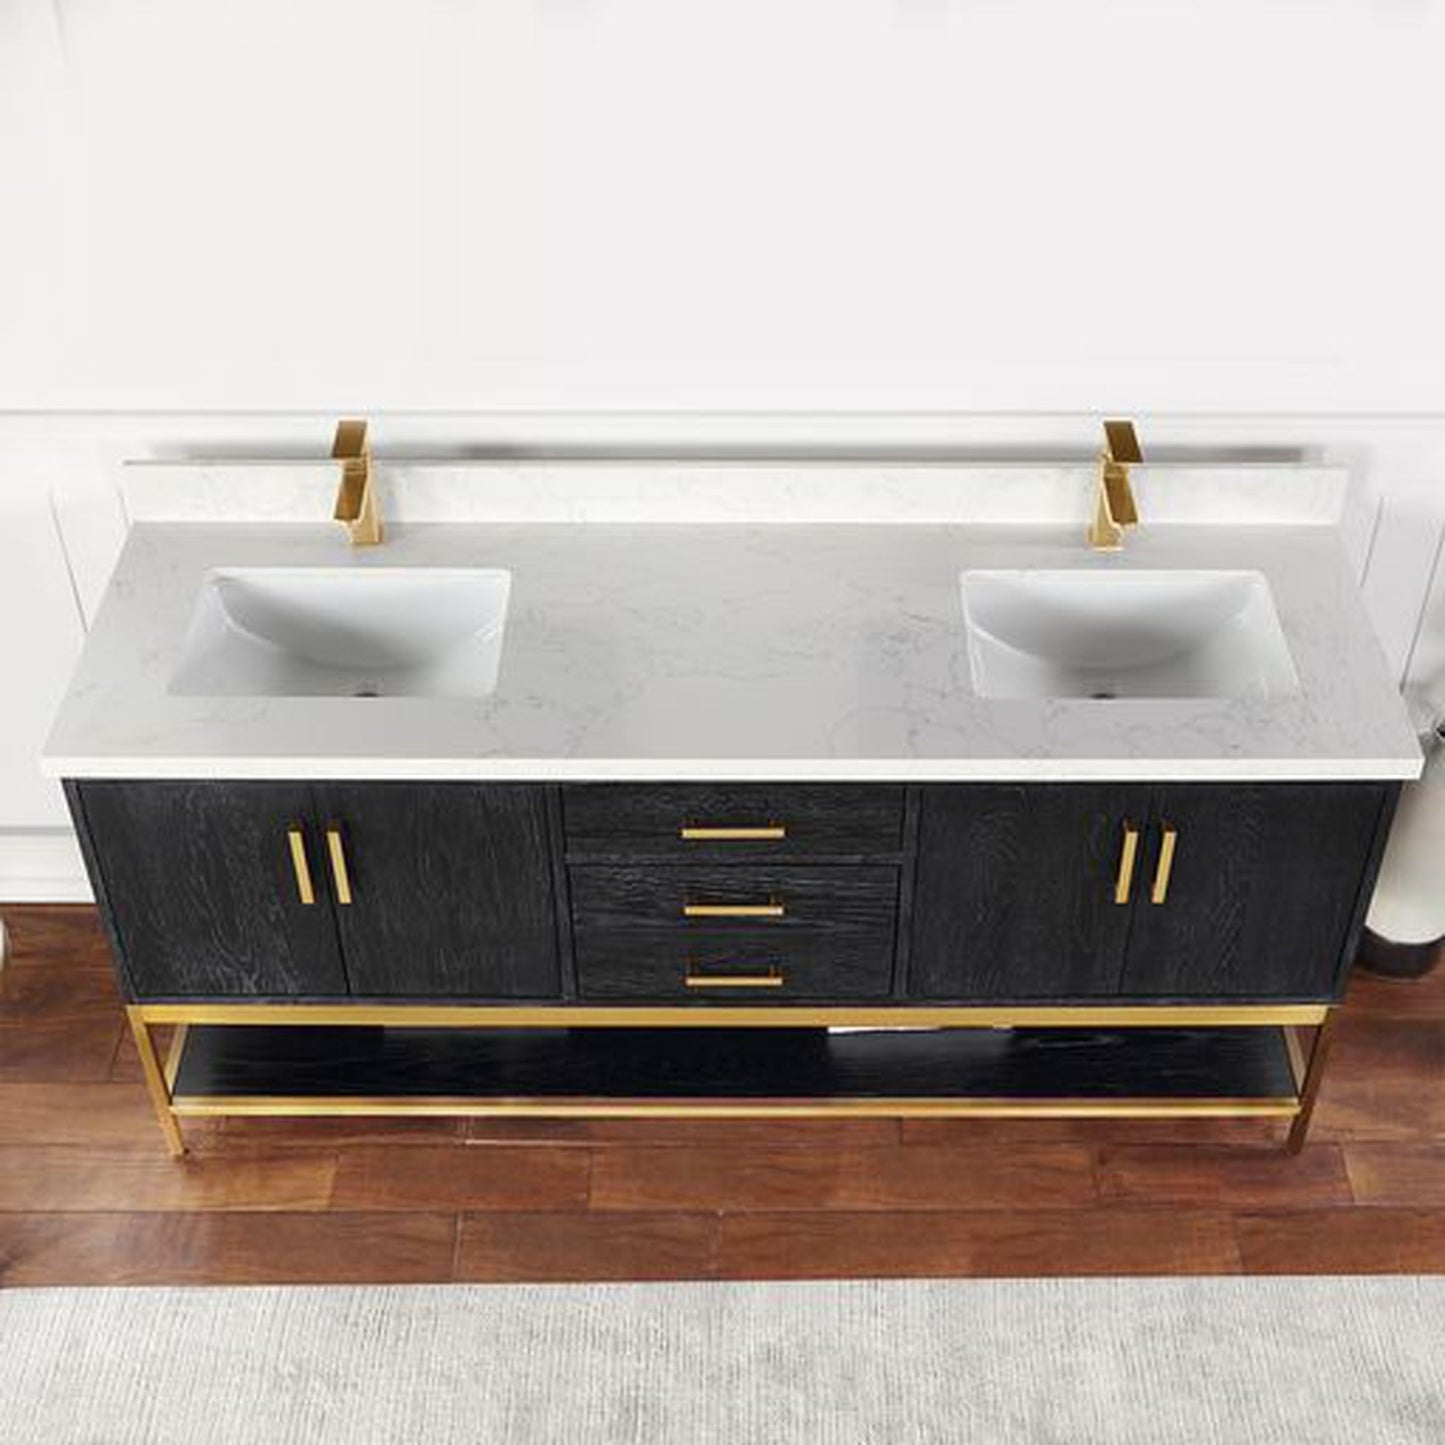 Altair Wildy 72" Black Oak Freestanding Double Bathroom Vanity Set With Stylish Composite Grain White Stone Top, Two Rectangular Undermount Ceramic Sinks, Overflow, and Backsplash